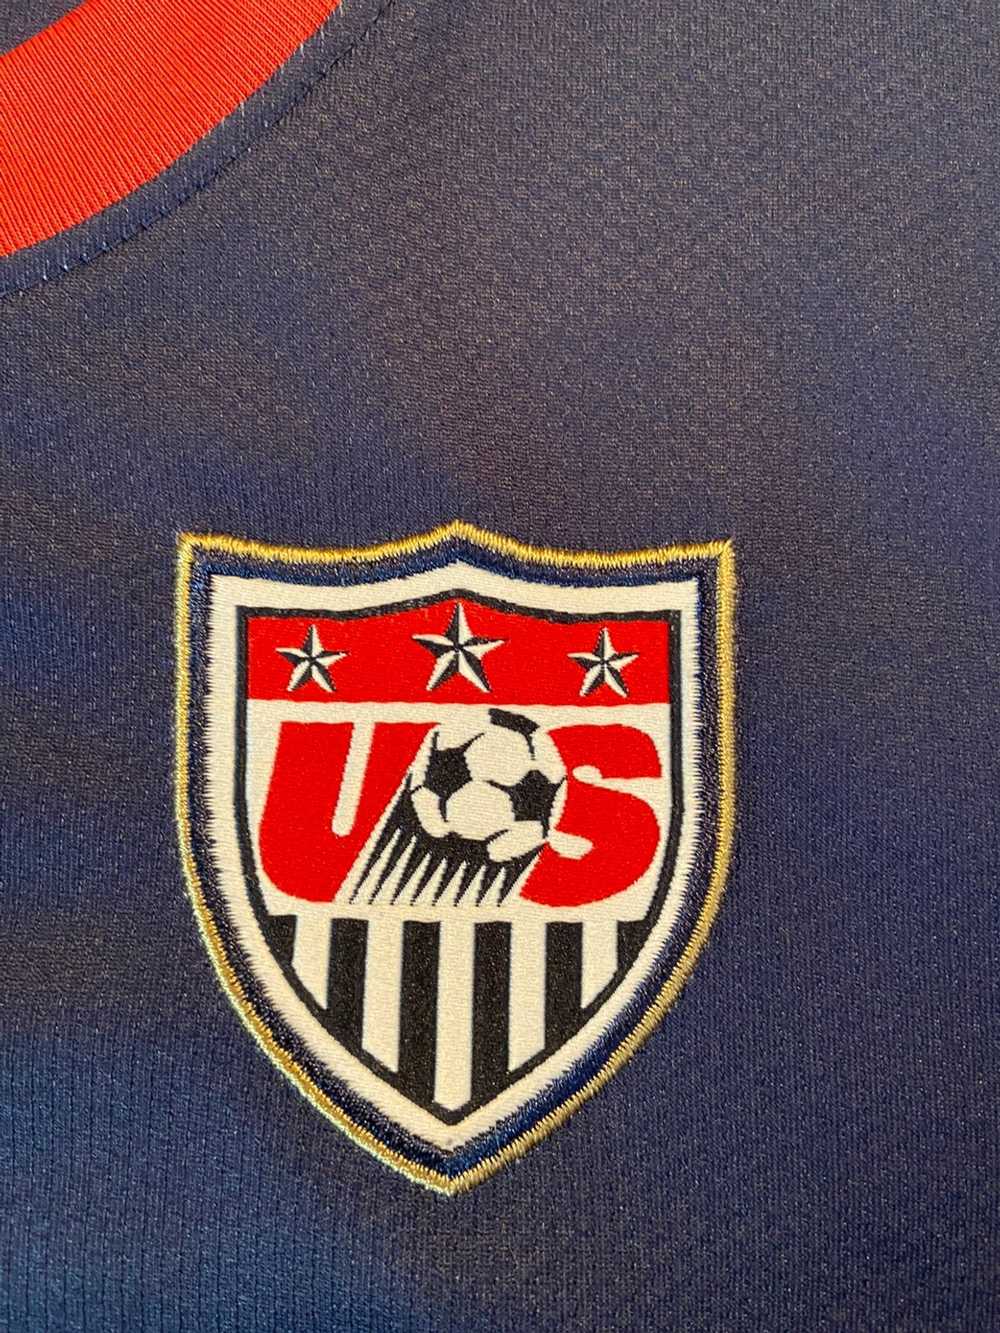 Nike USA Mens Soccer Jersey - image 2